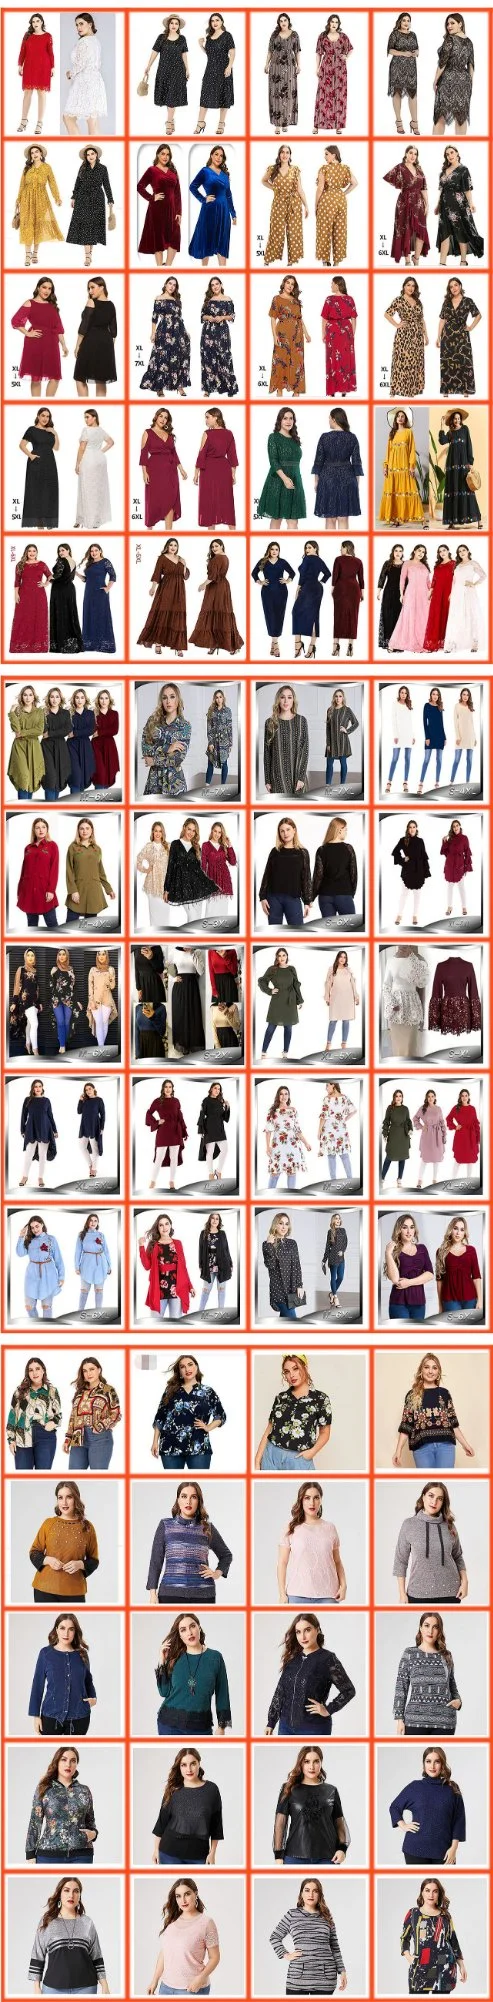 Women's Plus Size Wholesale Jacket Fur Coat Winter Long Hooded Sherpa Lined Parka Jacket Warm Coat Fashion Puffer Lady Coat Clothings